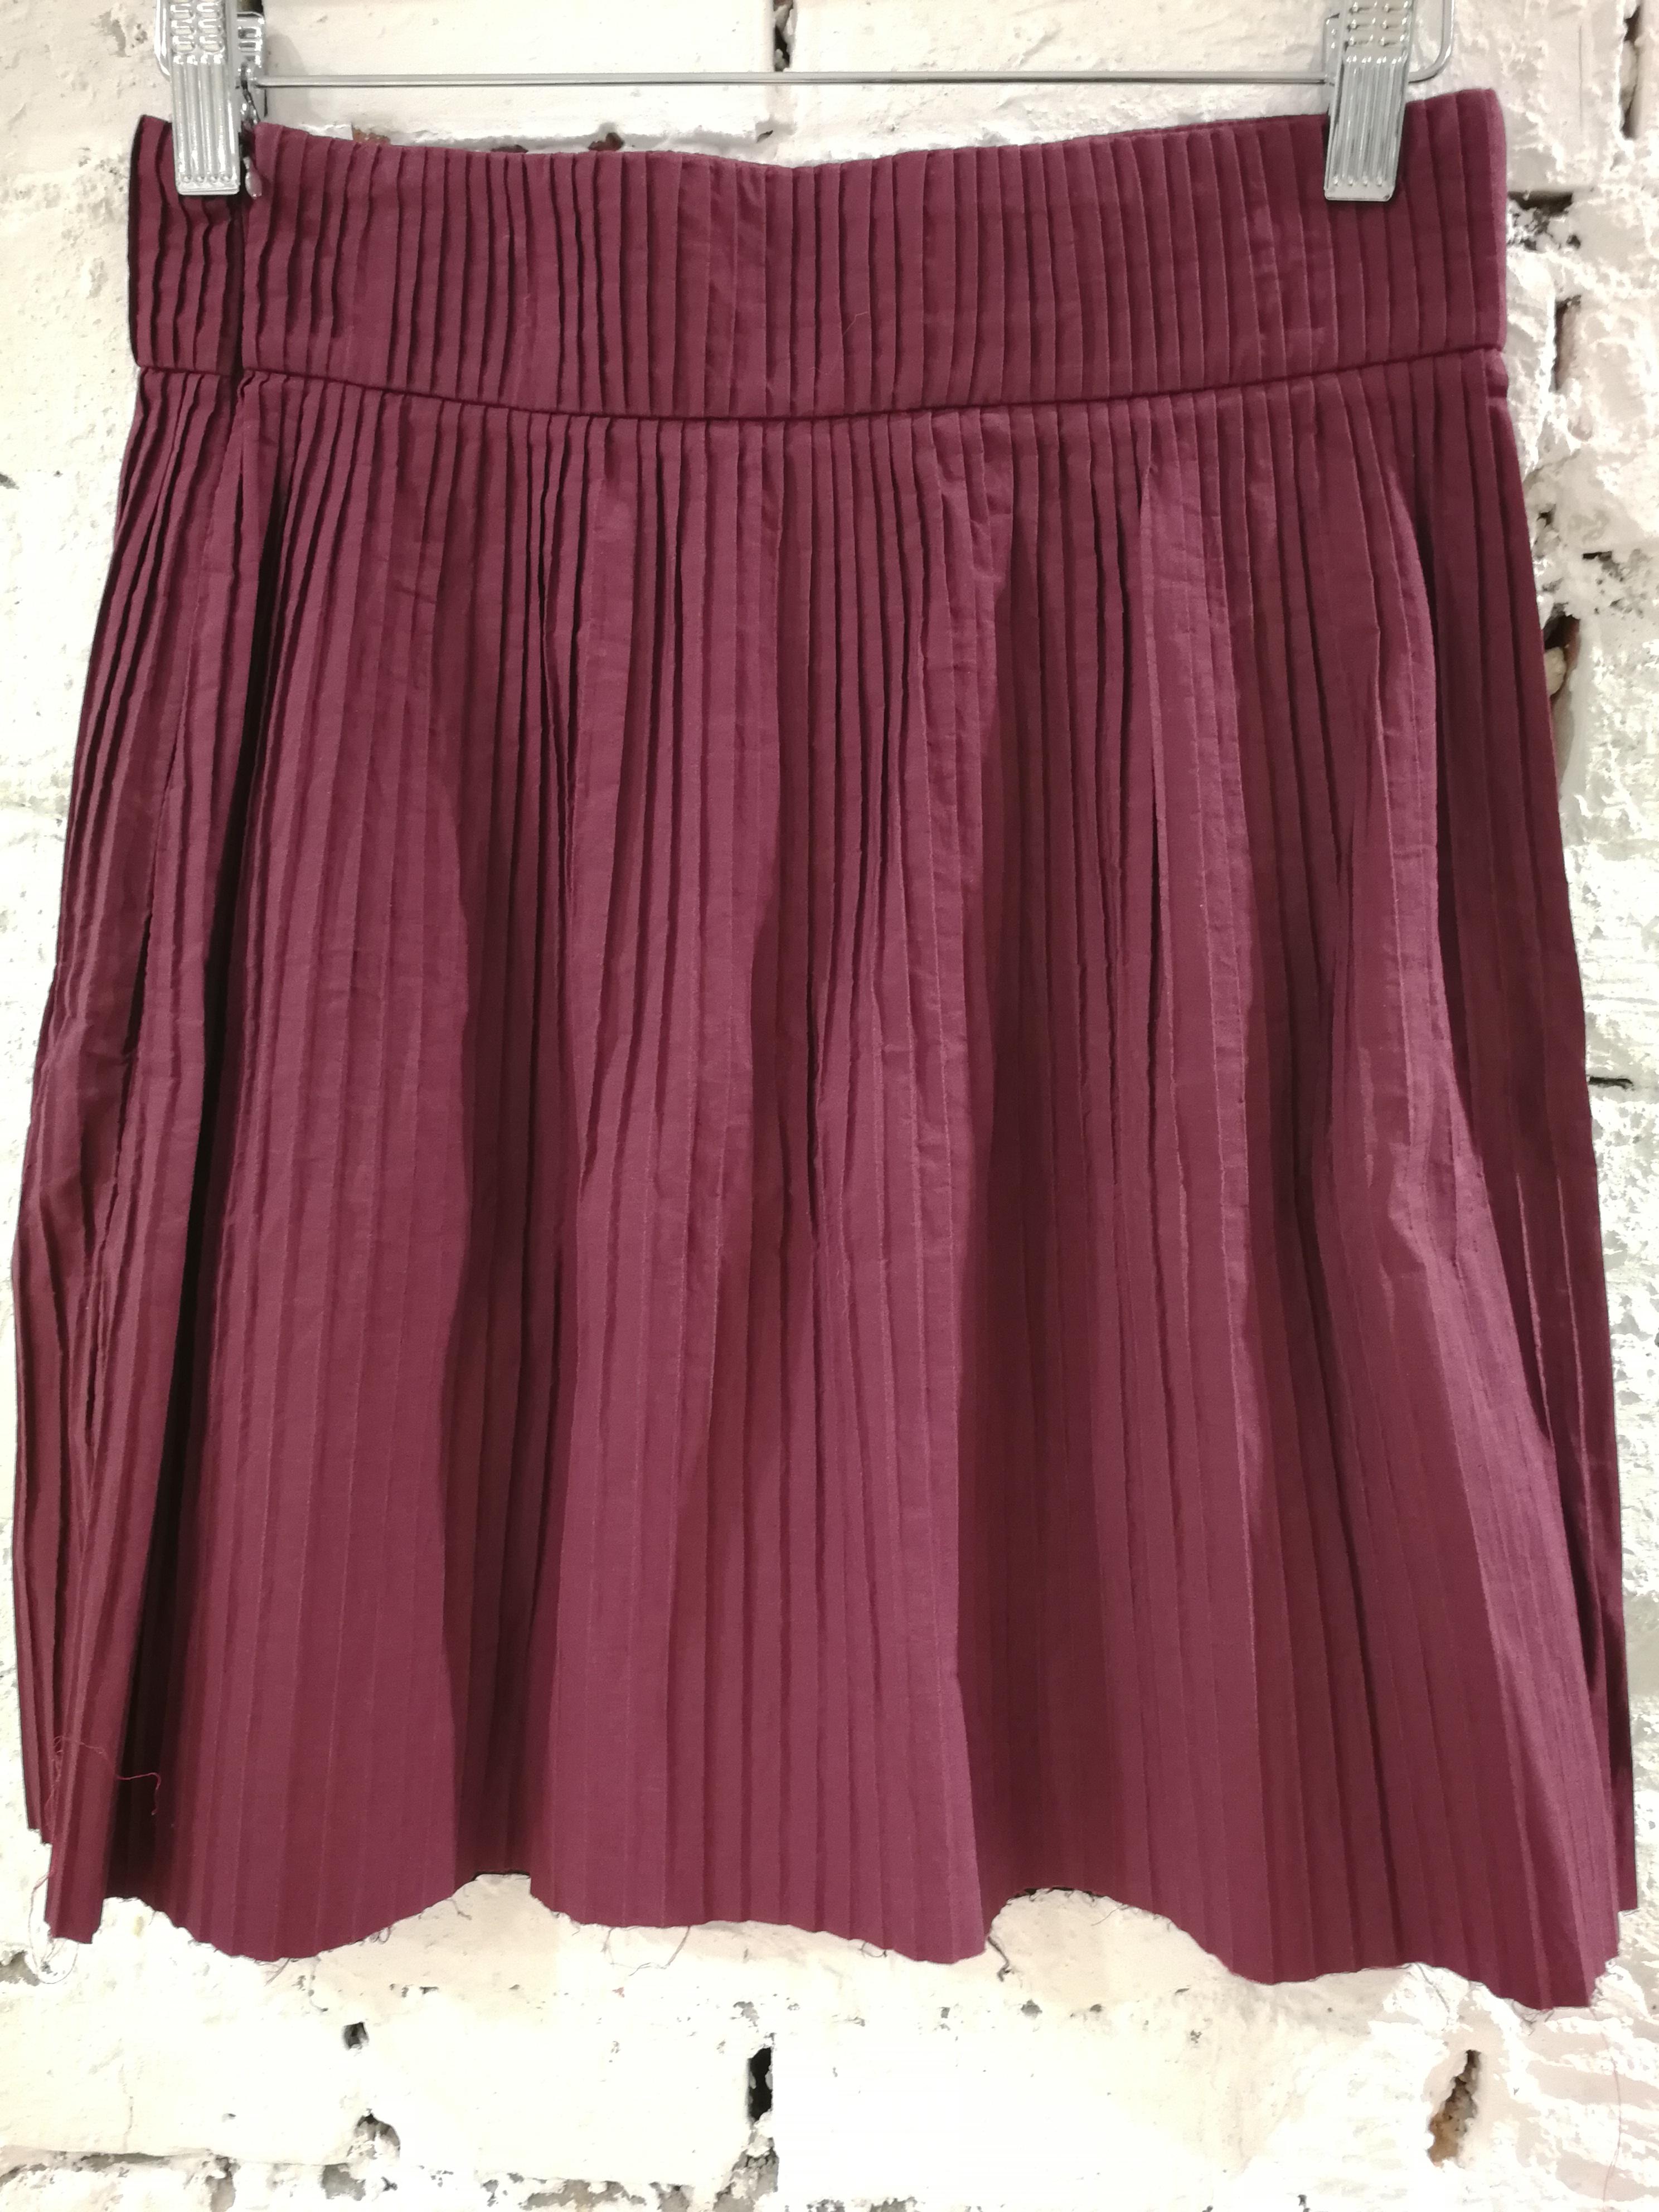 Miu Miu Bordeaux Cotton Skirt In Excellent Condition For Sale In Capri, IT